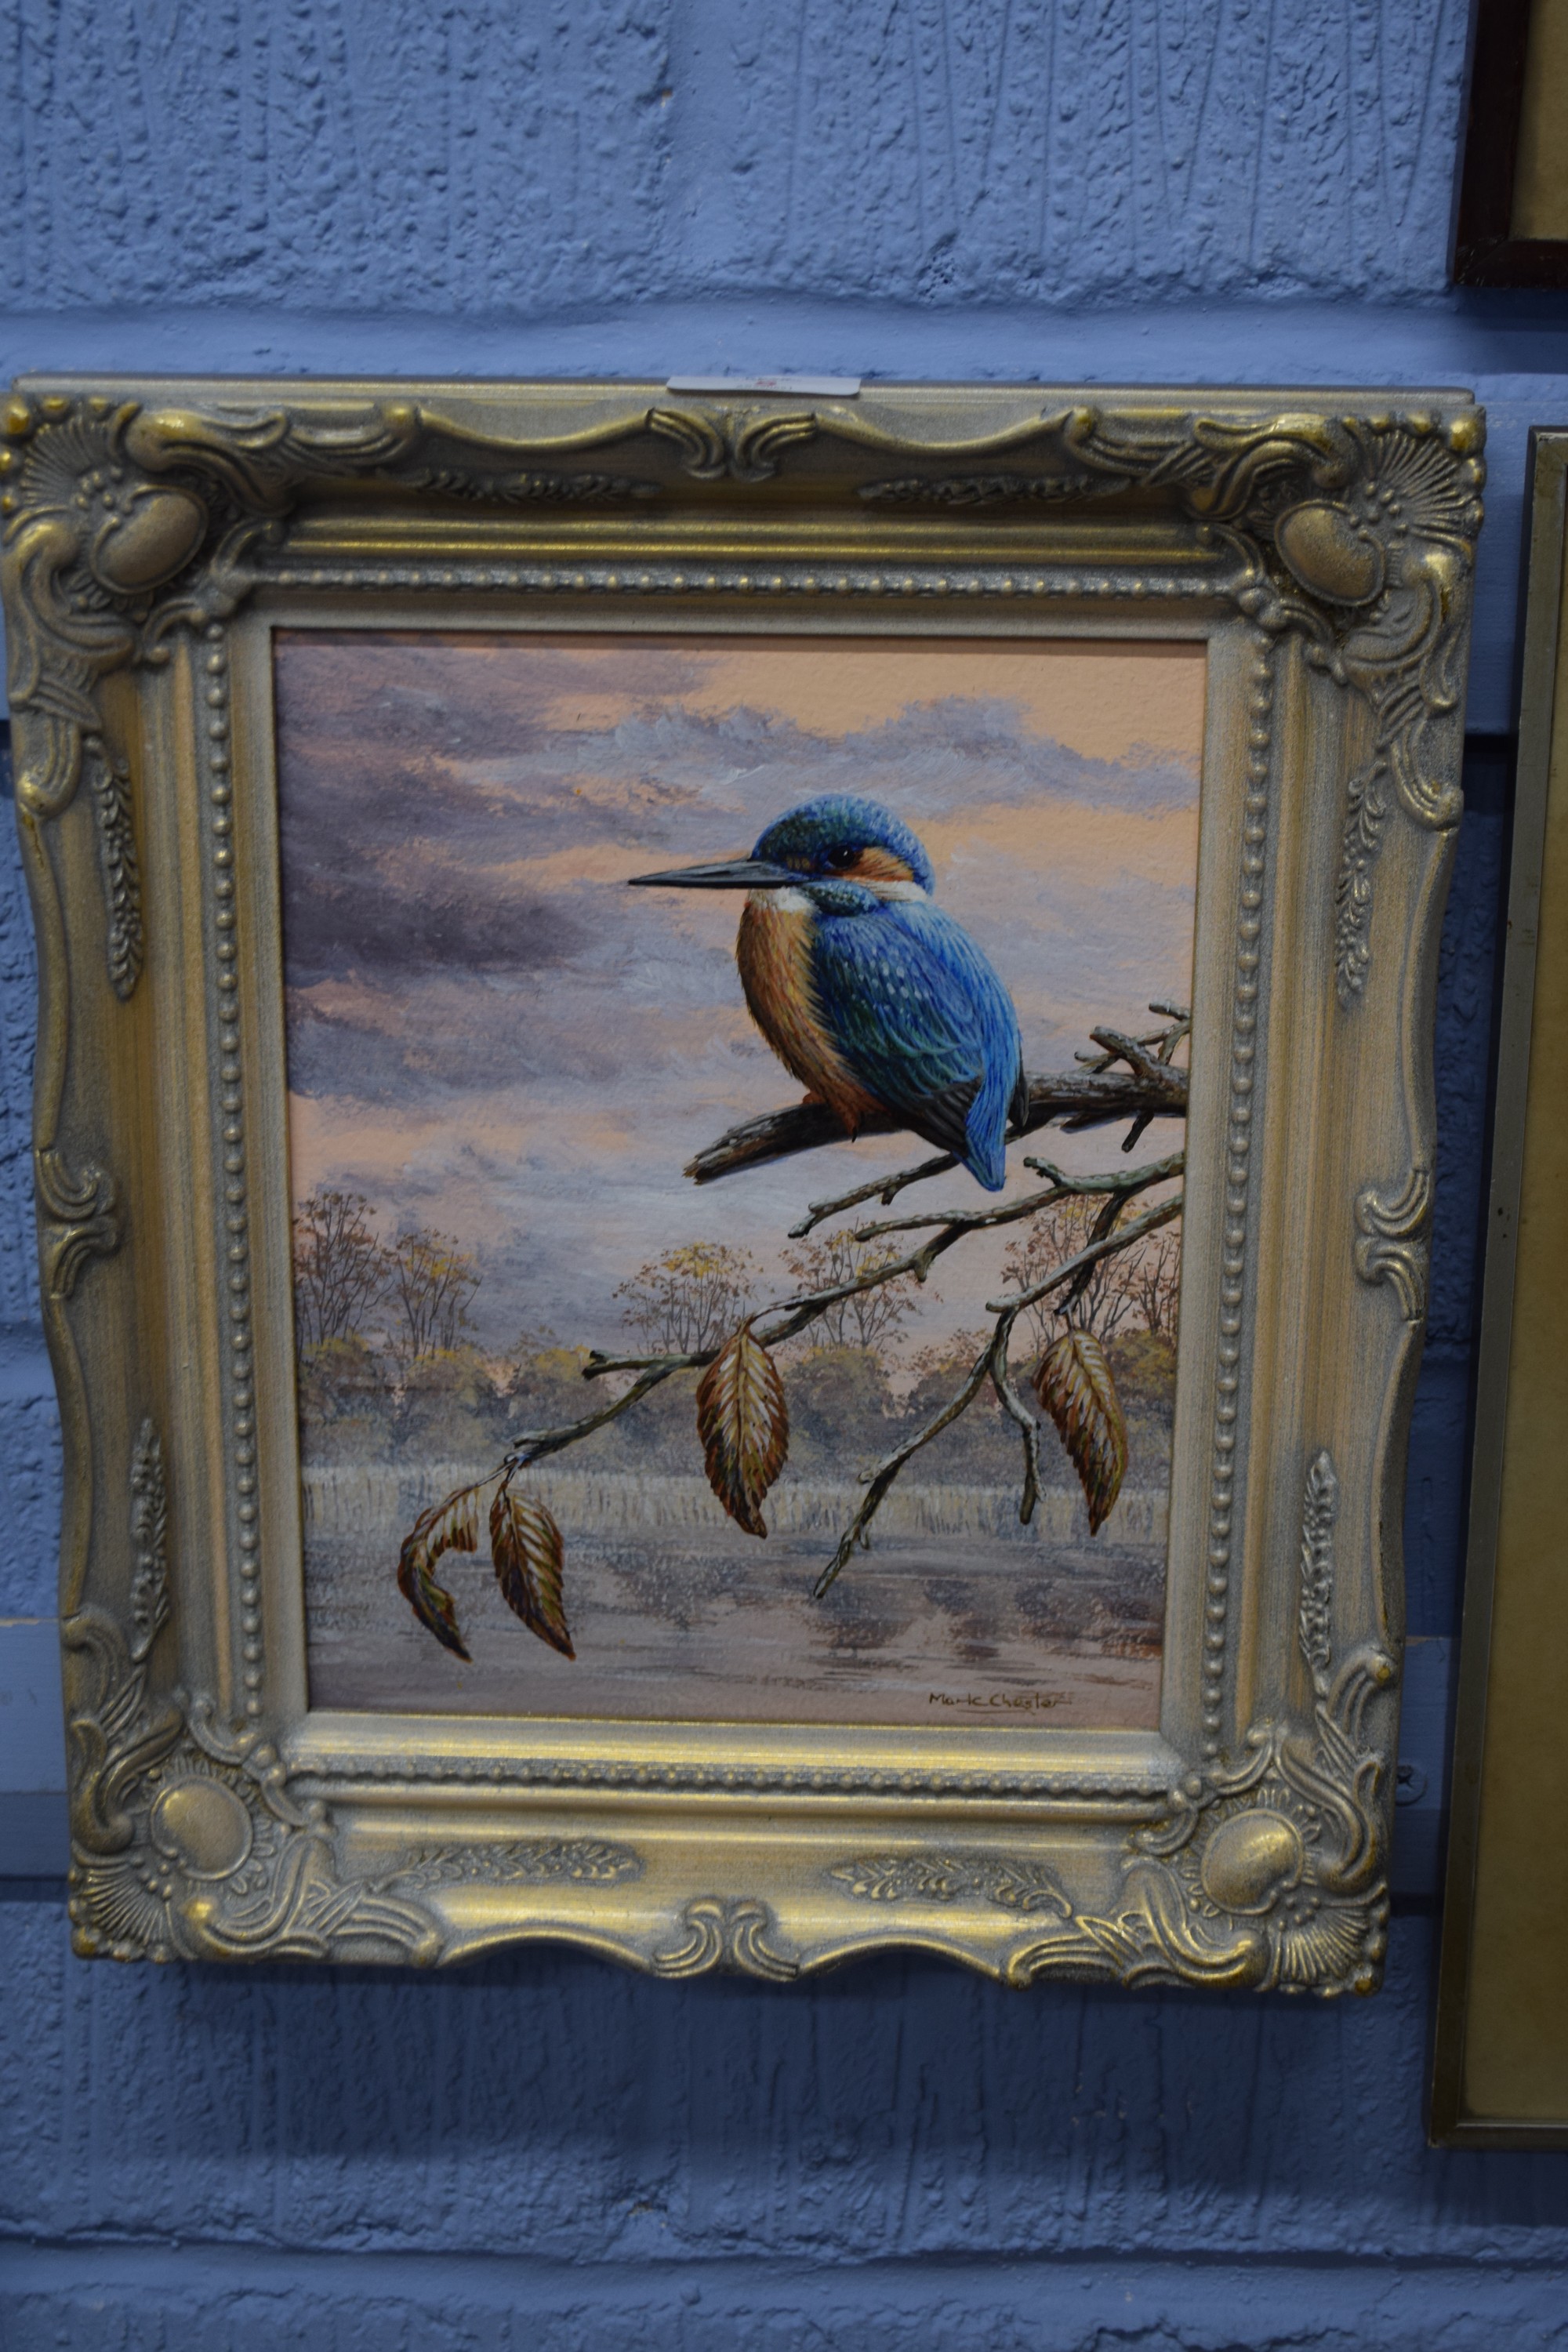 Mark Chester (contemporary), Oil on bord, Kingfisher, 24cm x 19cm